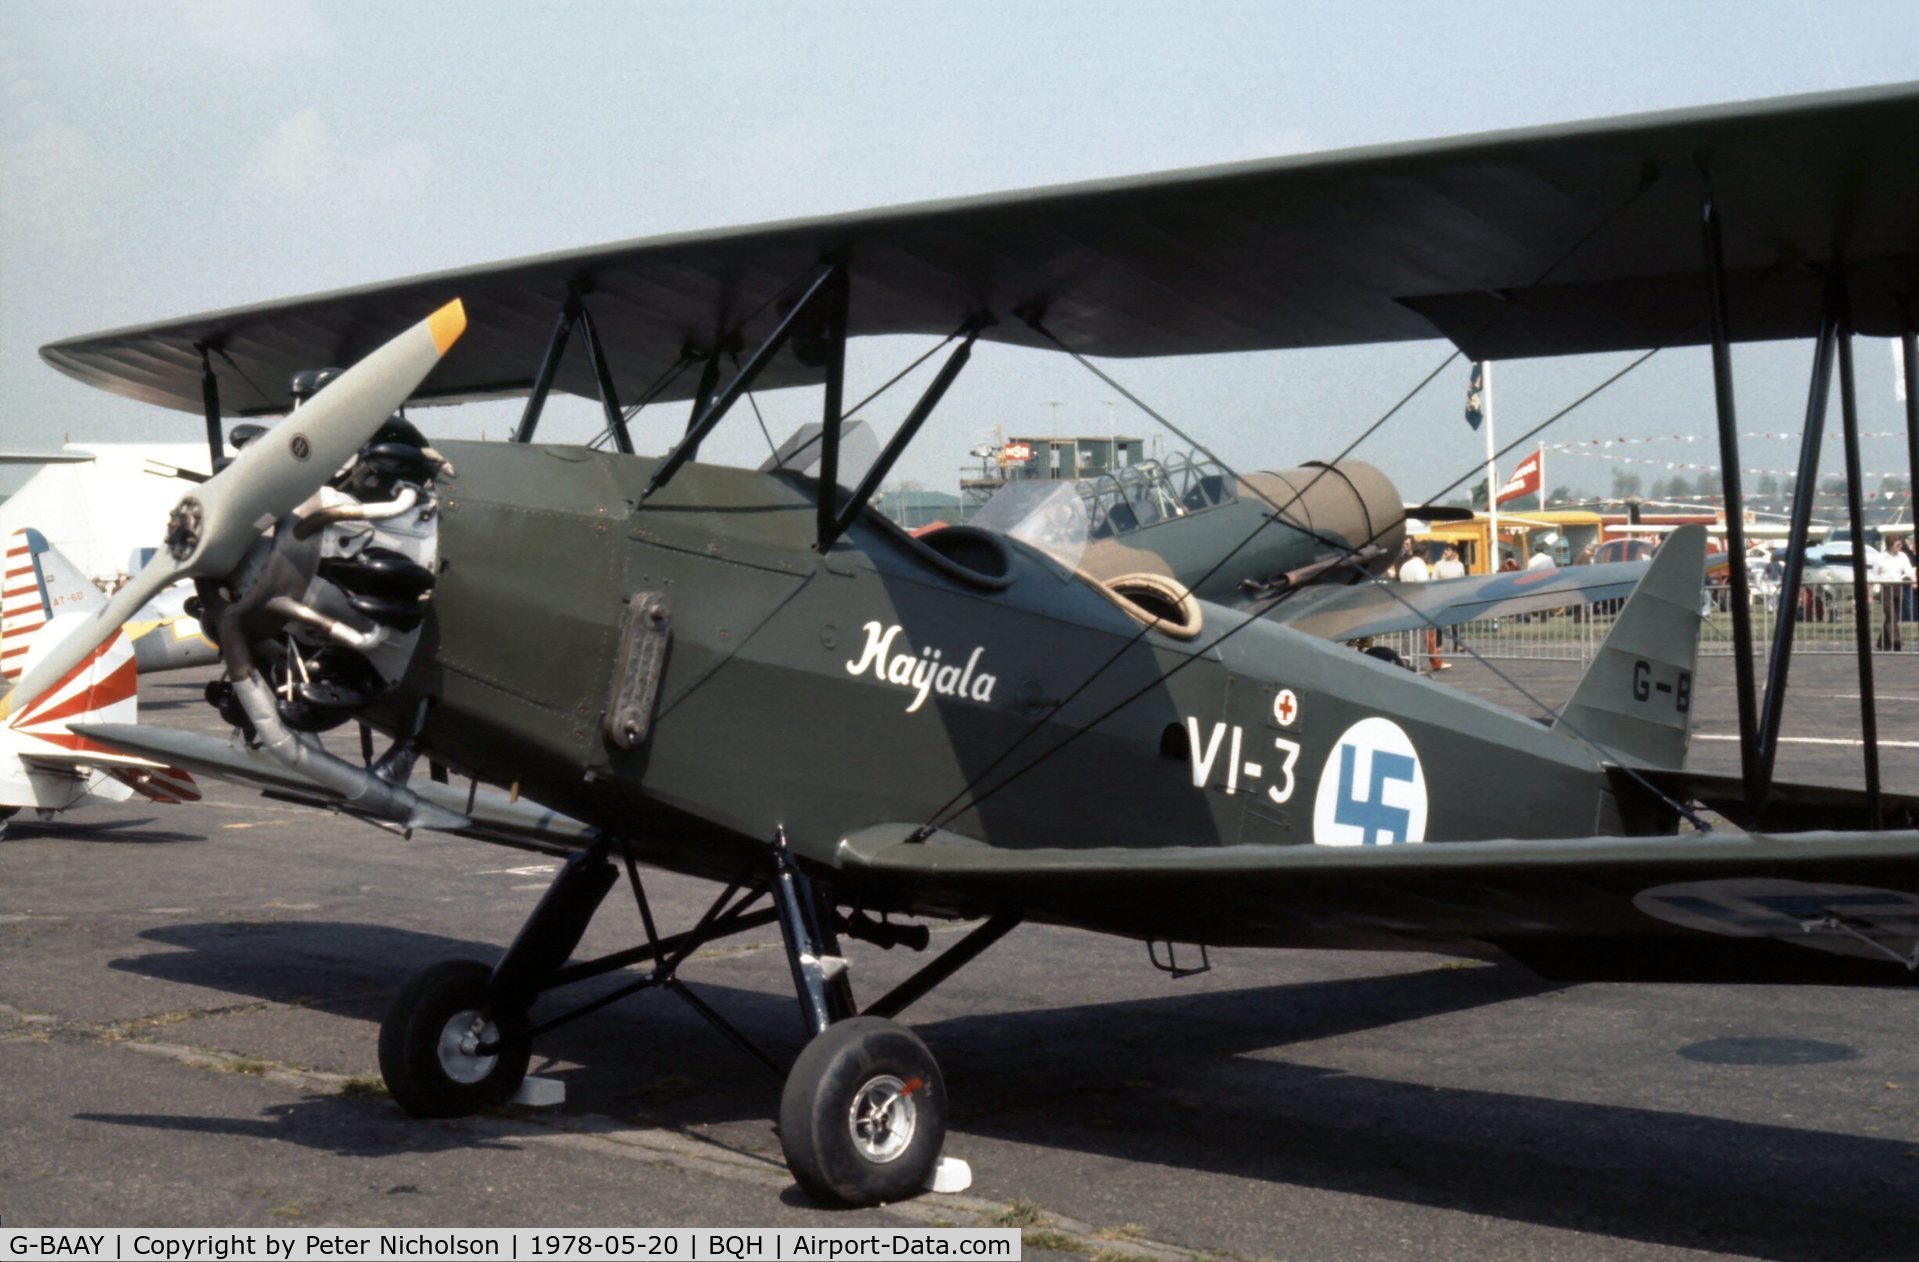 G-BAAY, 1939 Valtion Viima II C/N VI-3, A rare Finnish design seen at the 1978 Biggin Hill Airshow.